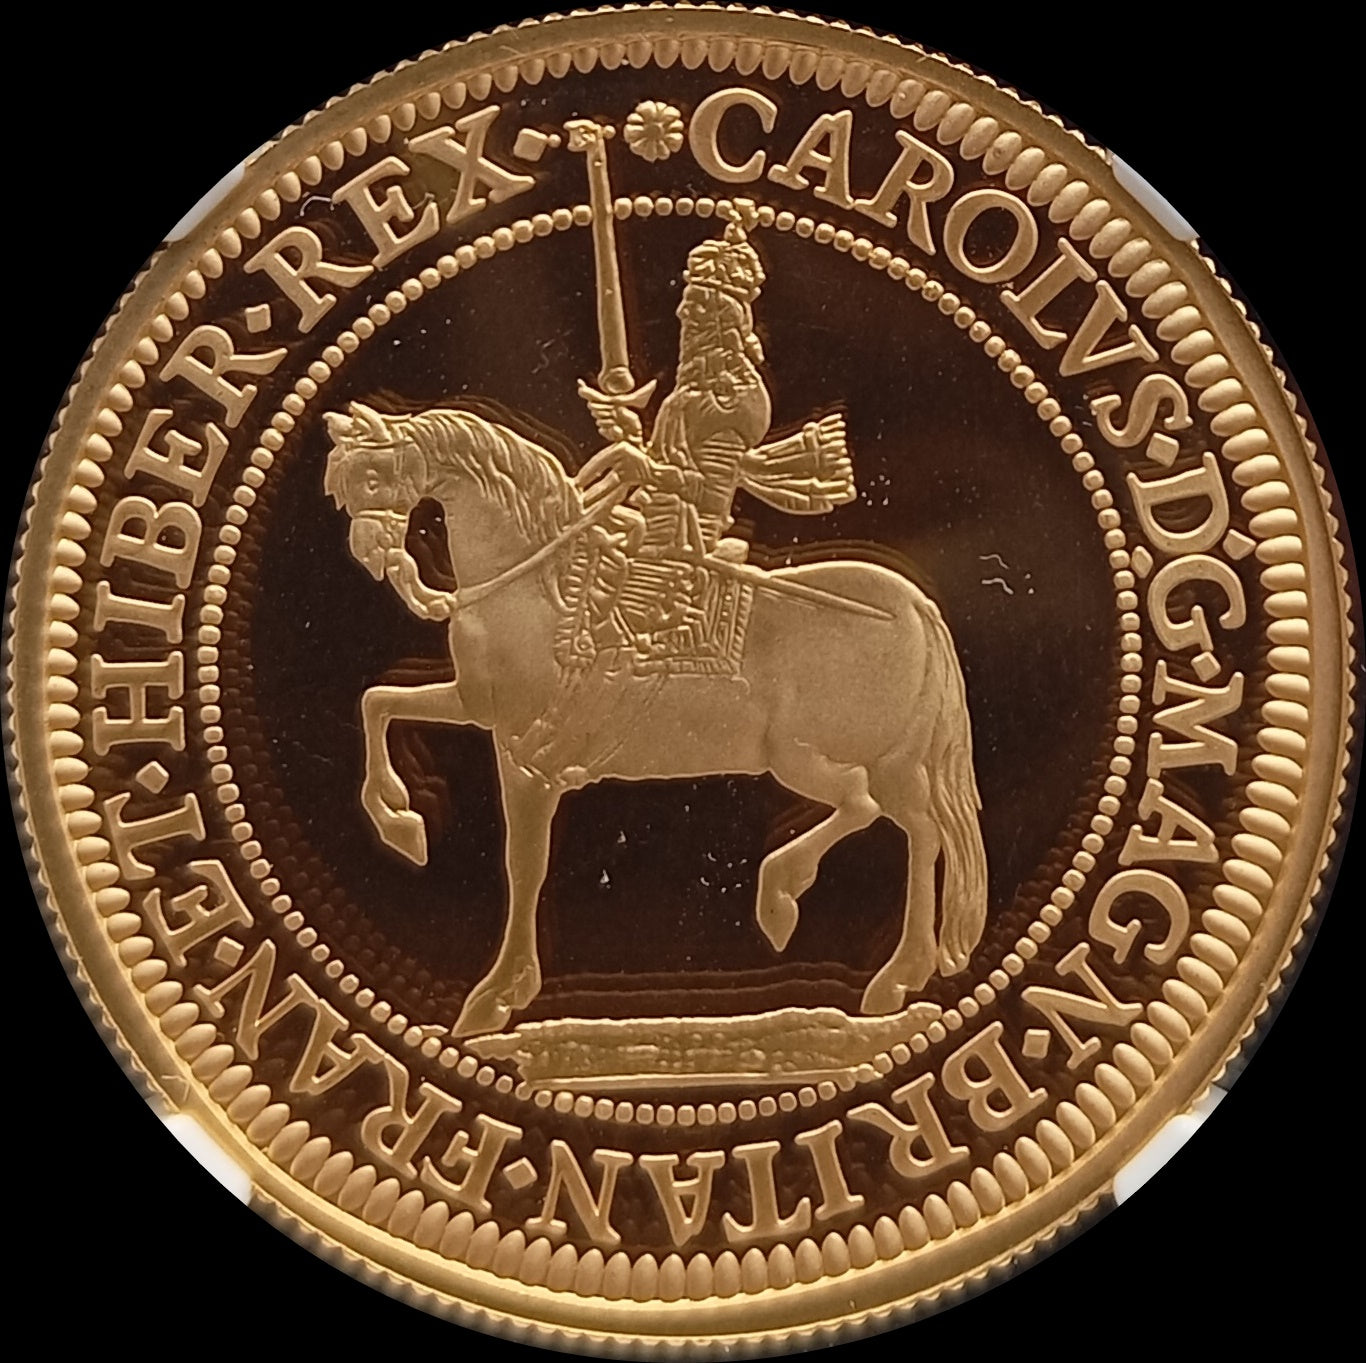 Charles I, British Monarchs, 1 Oz Gold 100 £, Proof NGC PF 69, 2023